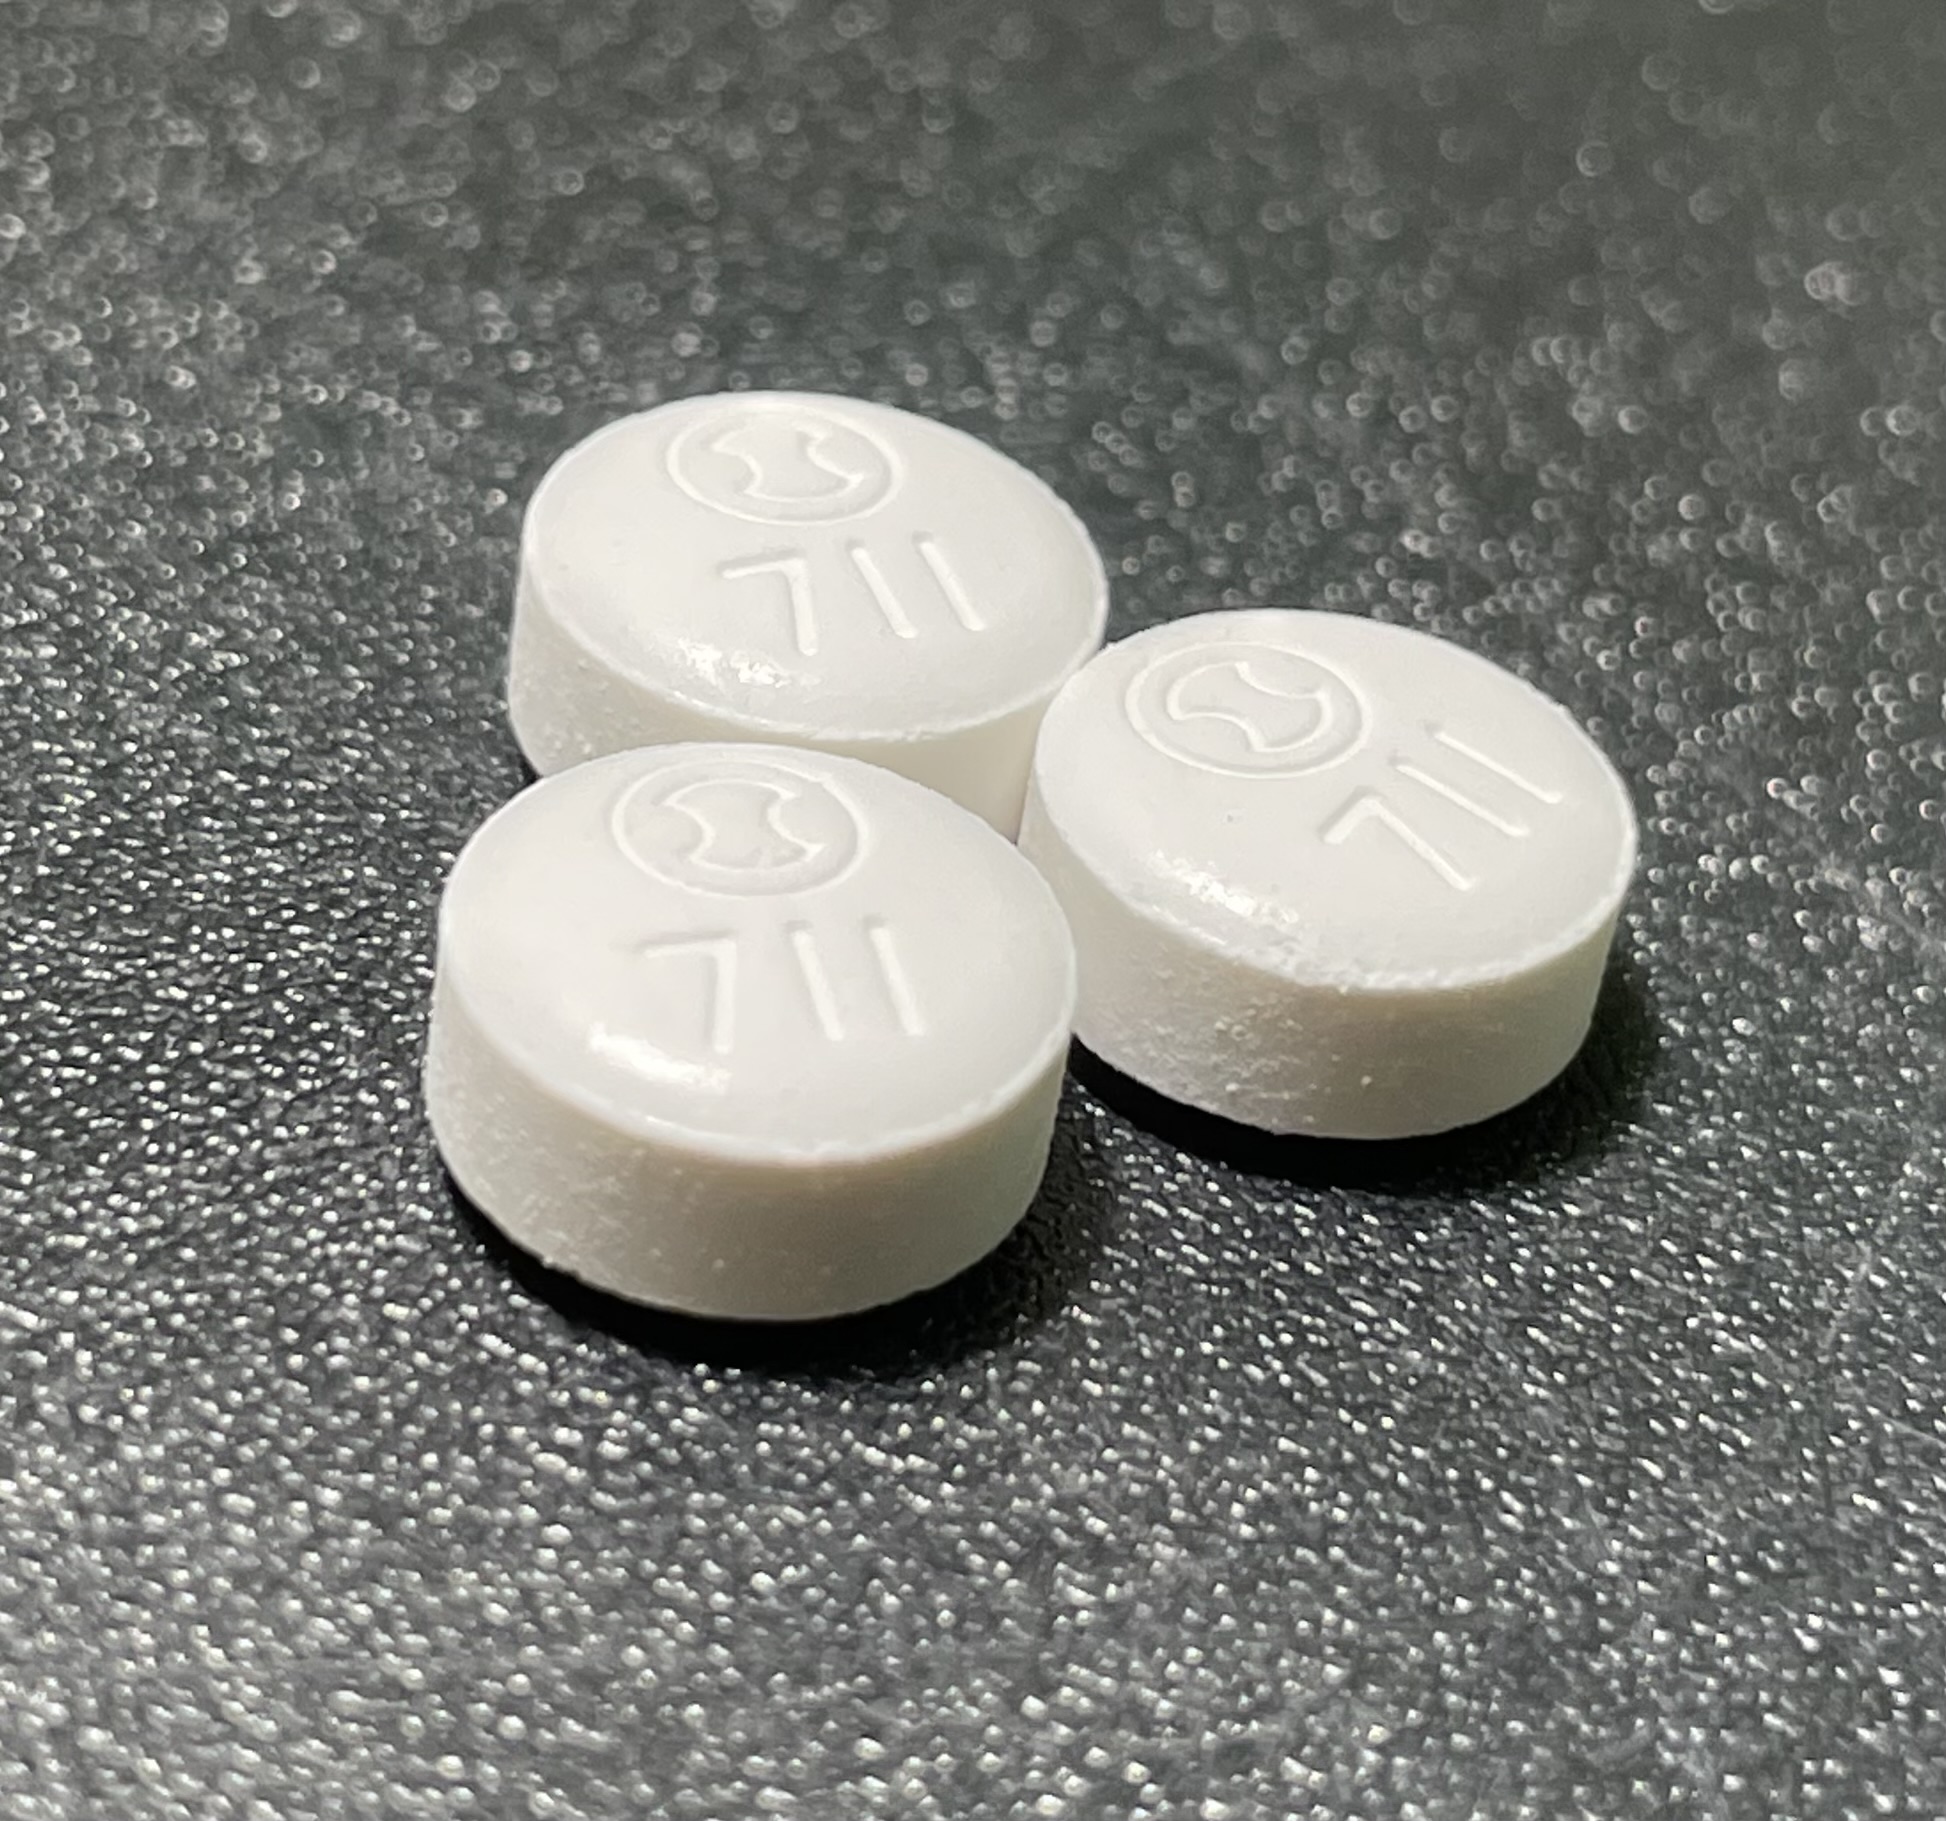 Ensitrelvir, a COVID-19 antiviral made by the pharmaceutical company Shionogi.